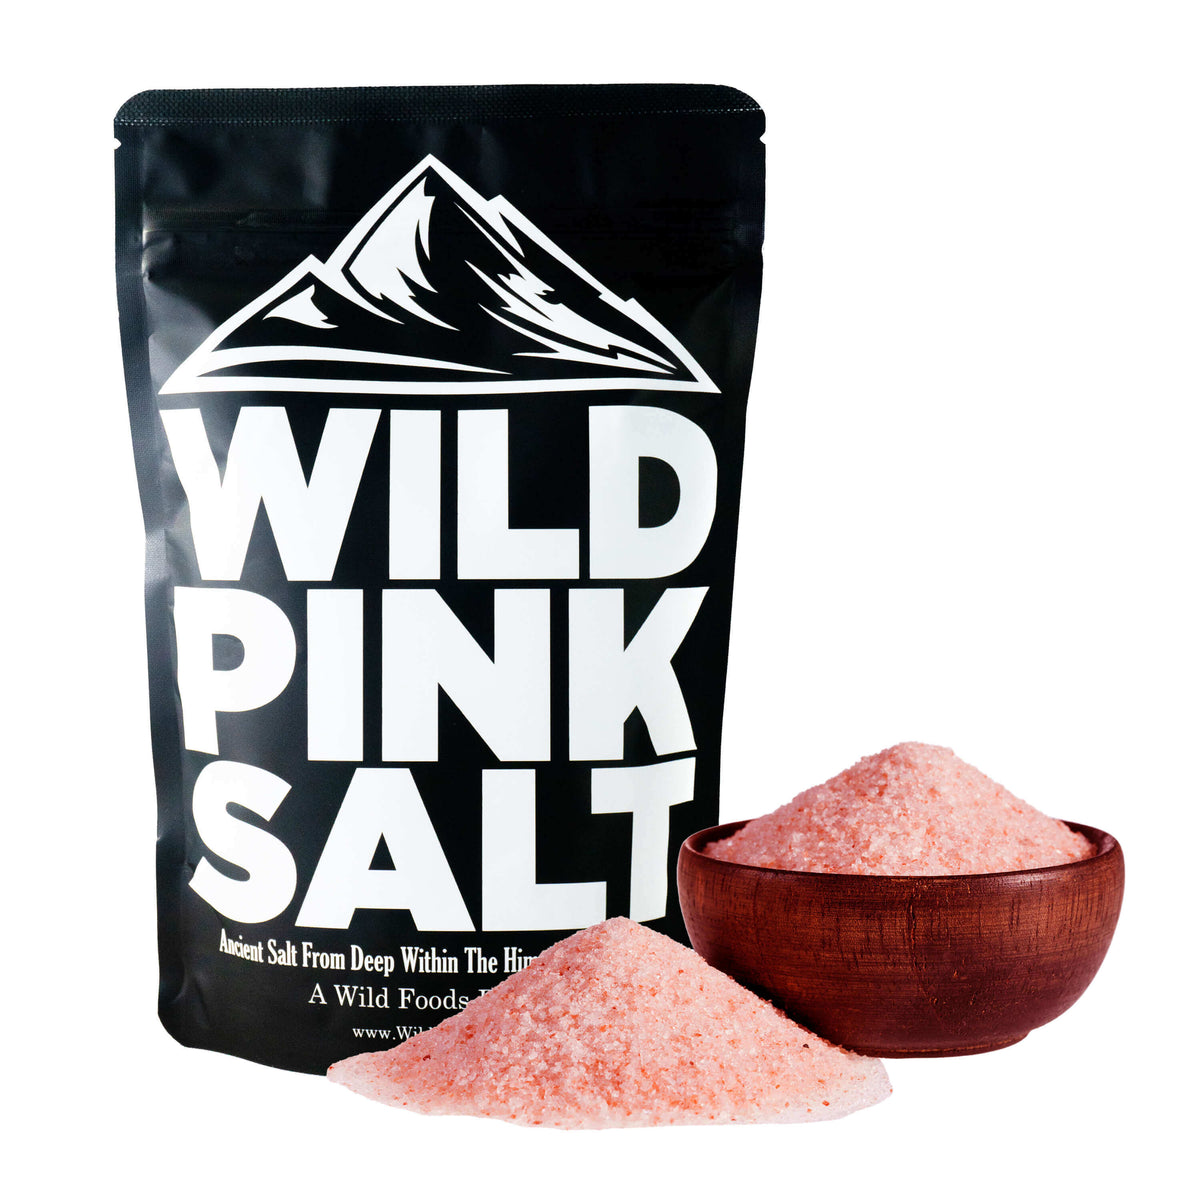 Sea Salt & Himalayan Salt Tested For Heavy Metals Like Lead